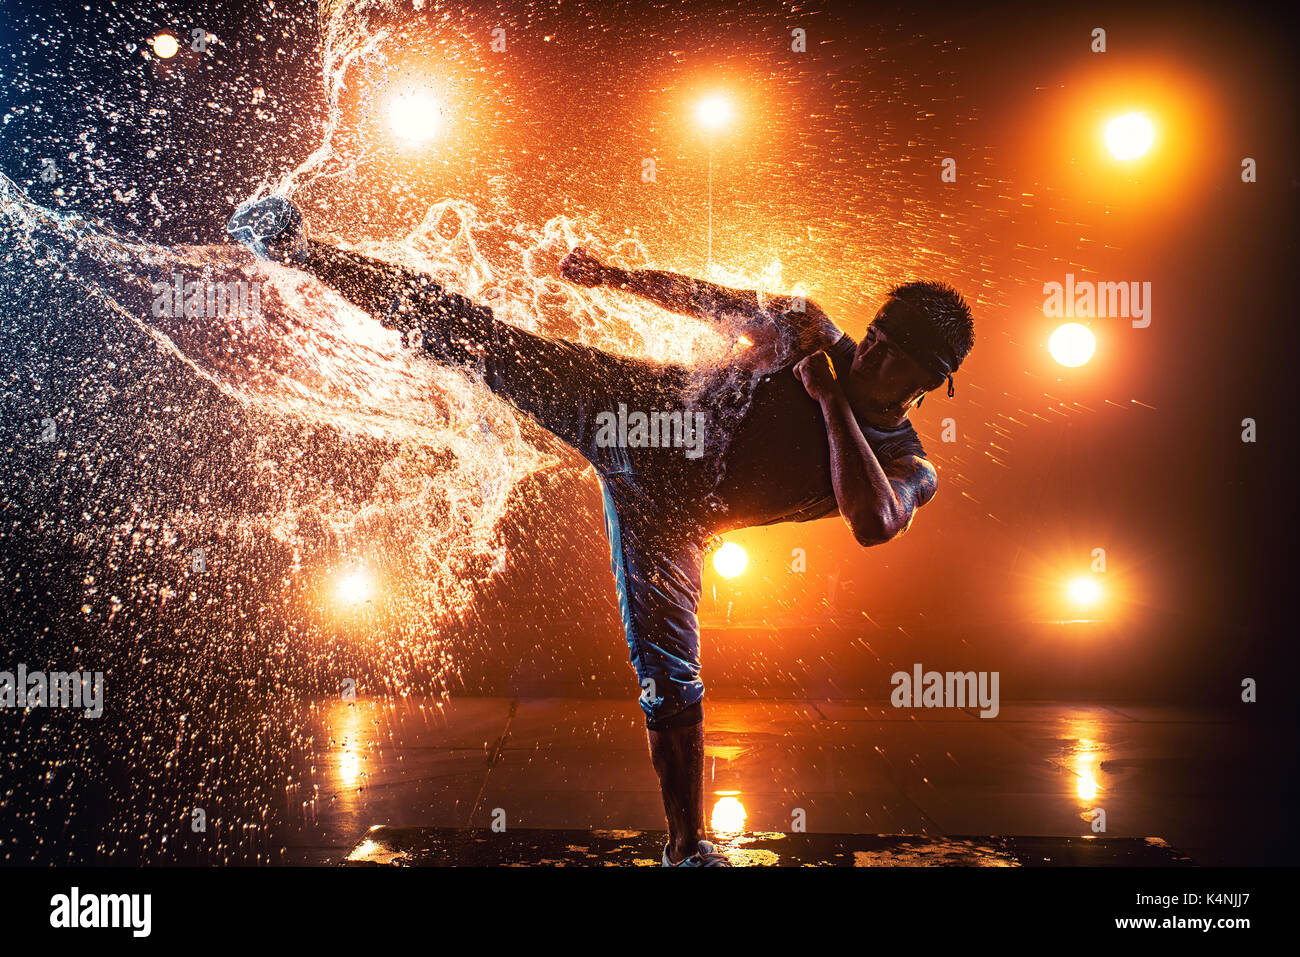 Young man break dancer making kick on splashing water. Tattoo on body. Stock Photo